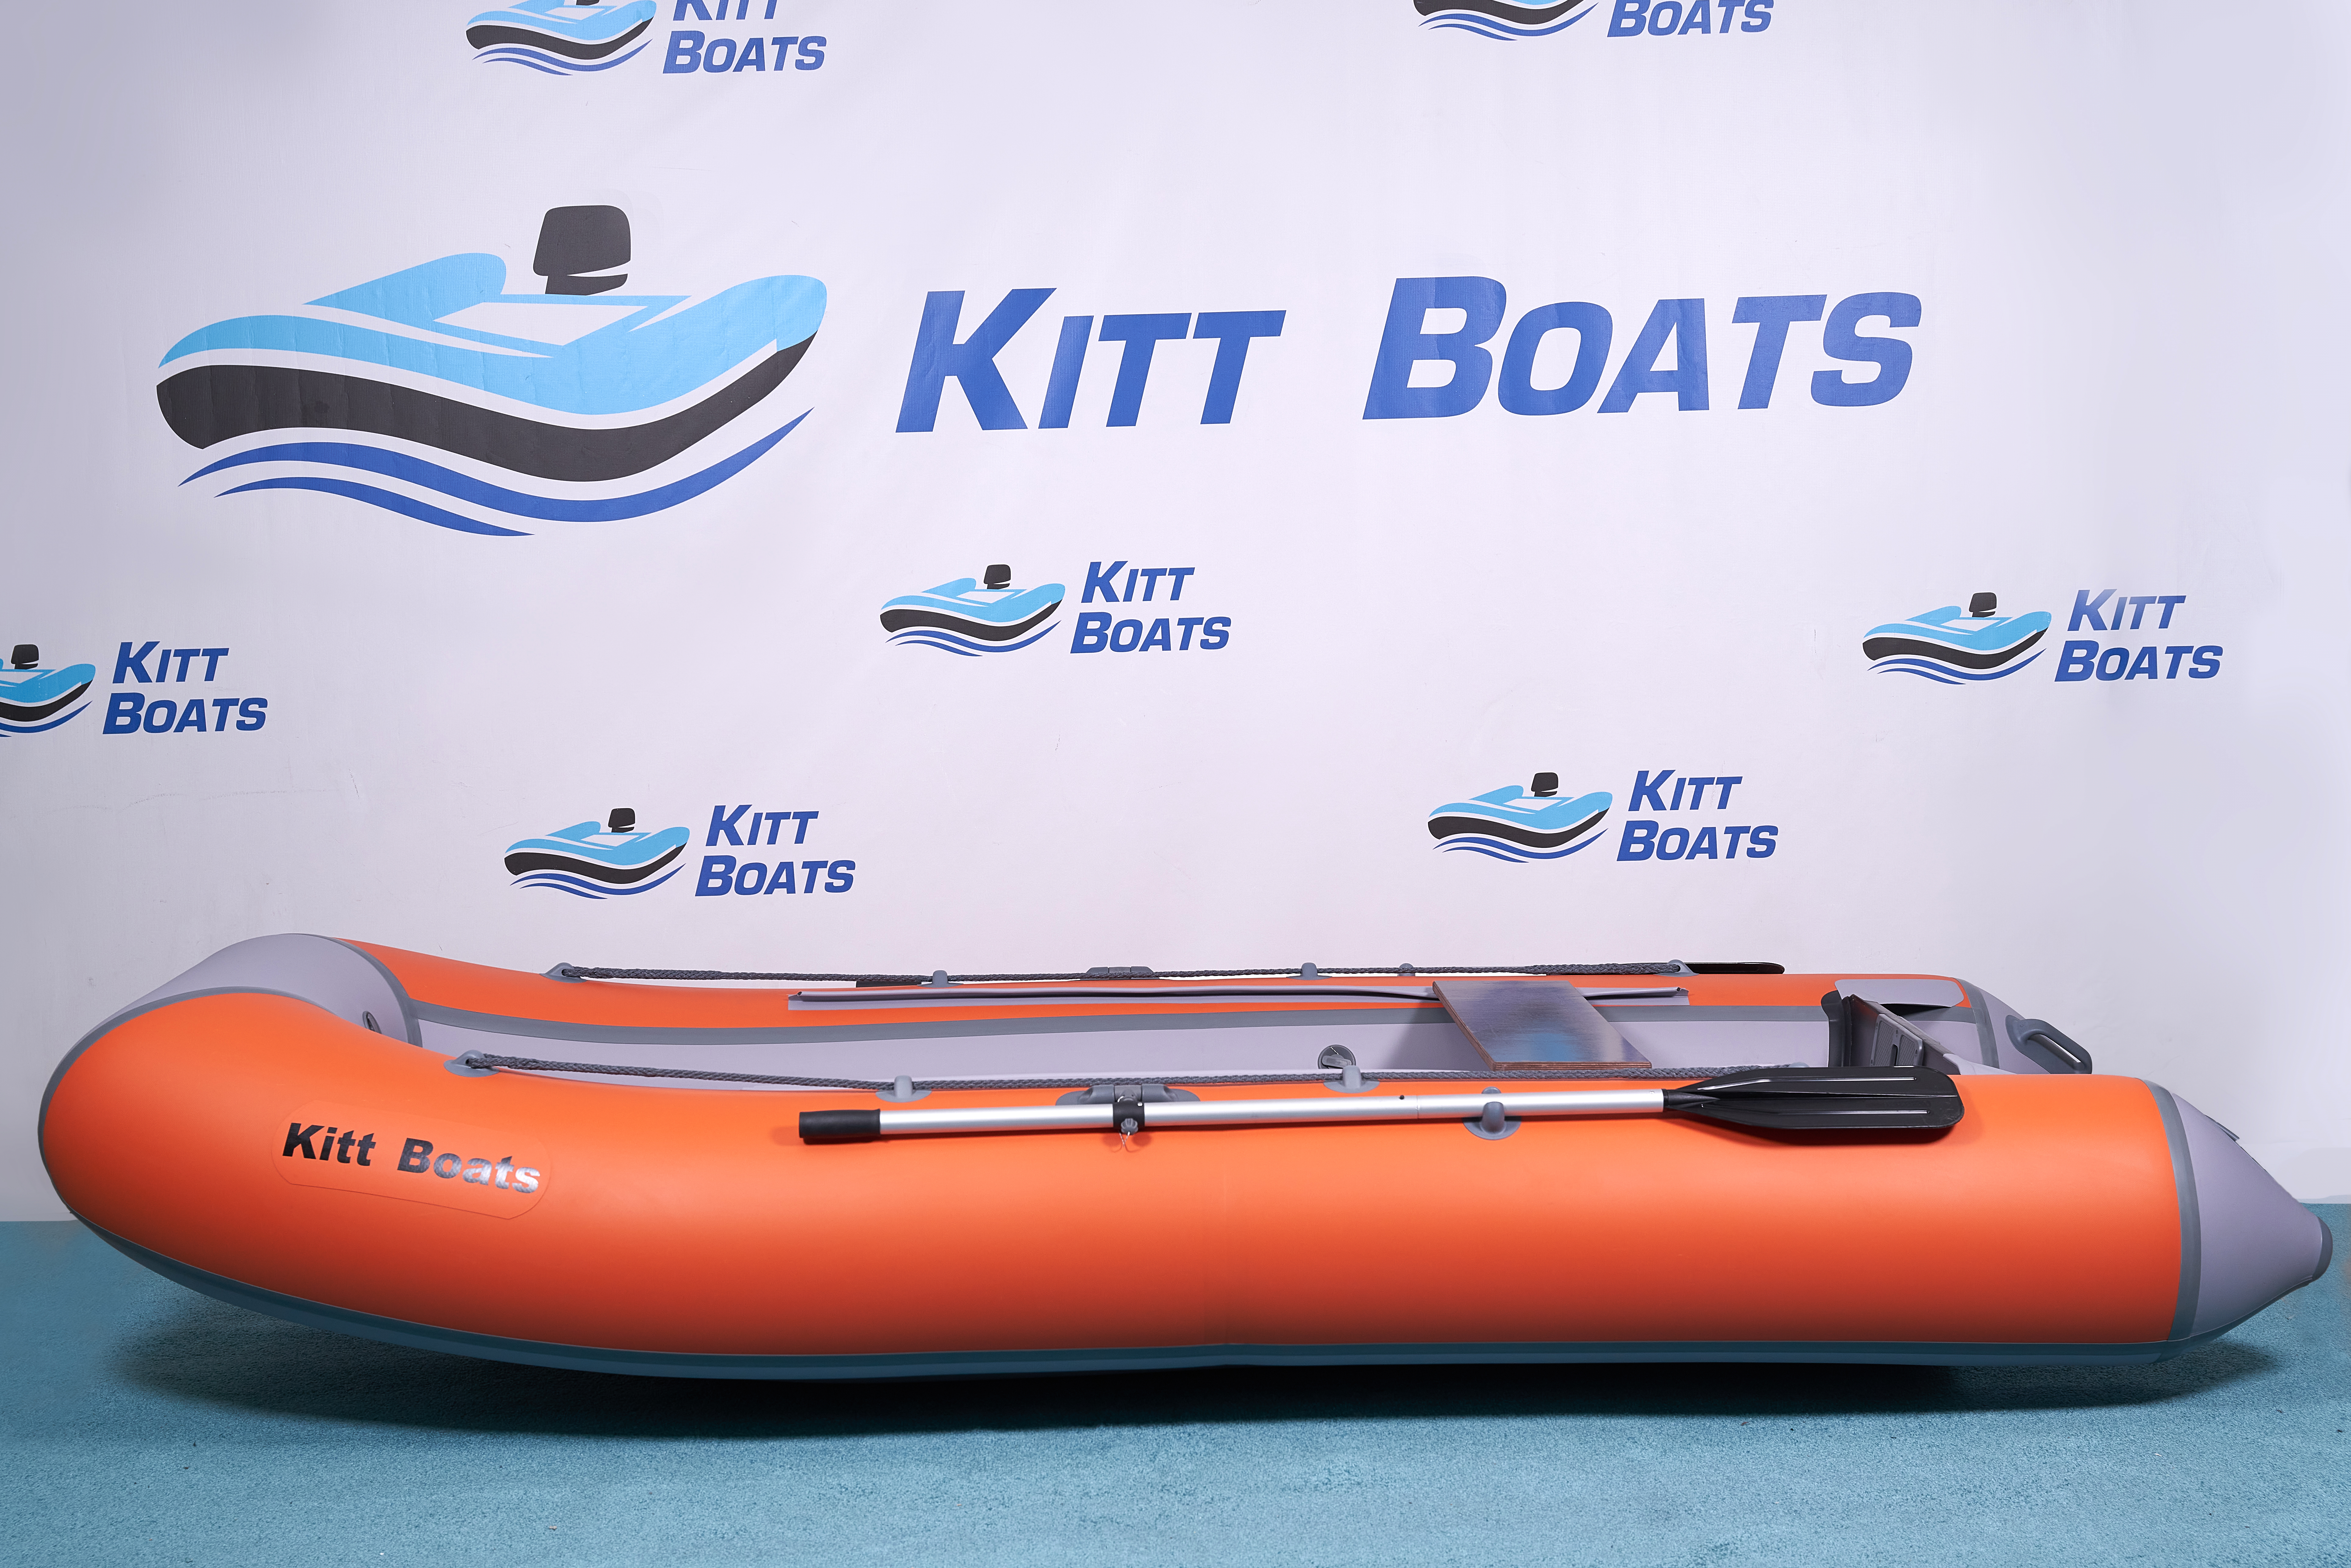 Kitt Boats 320 НДНД